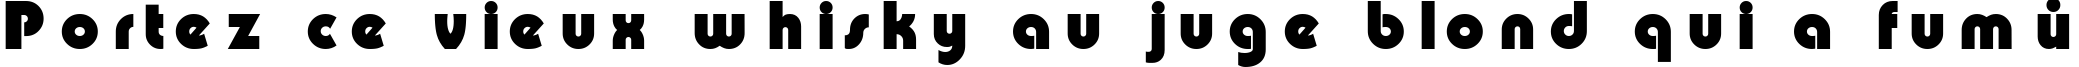 Пример написания шрифтом Pump текста на французском